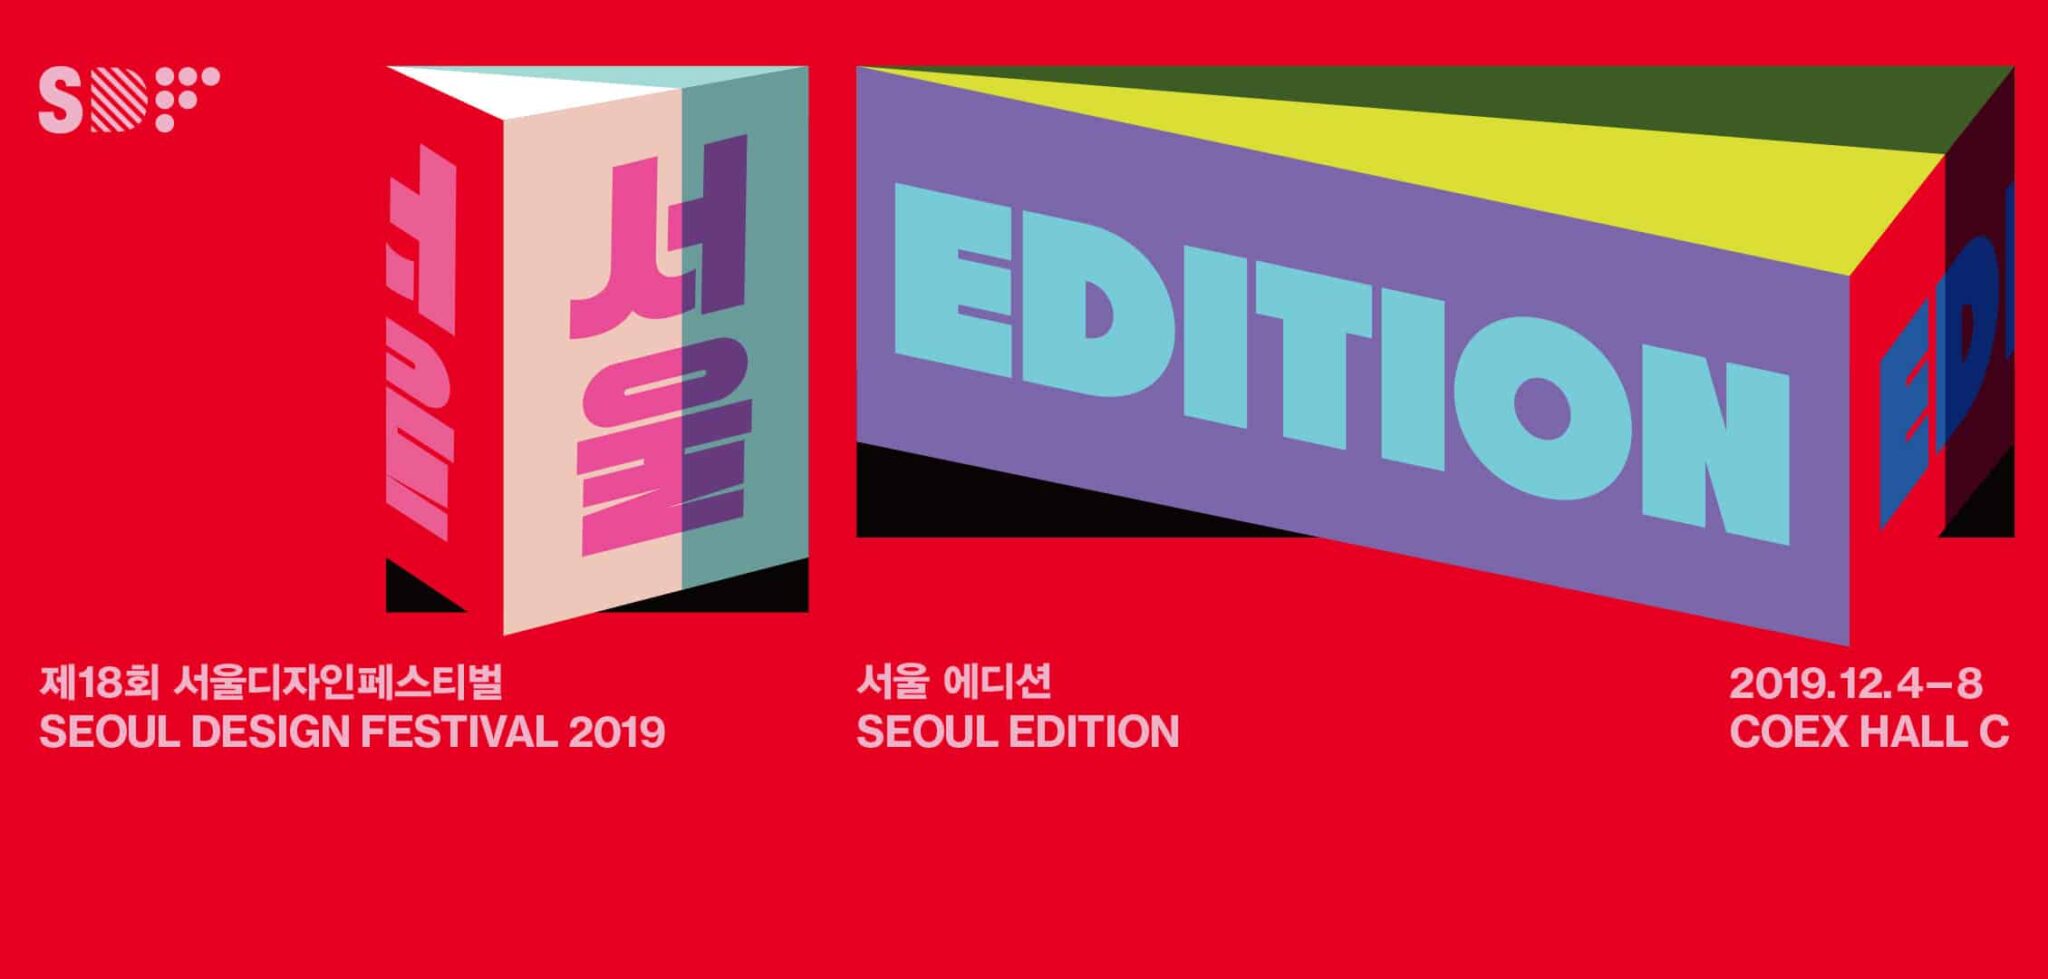 seoul design festival 2019